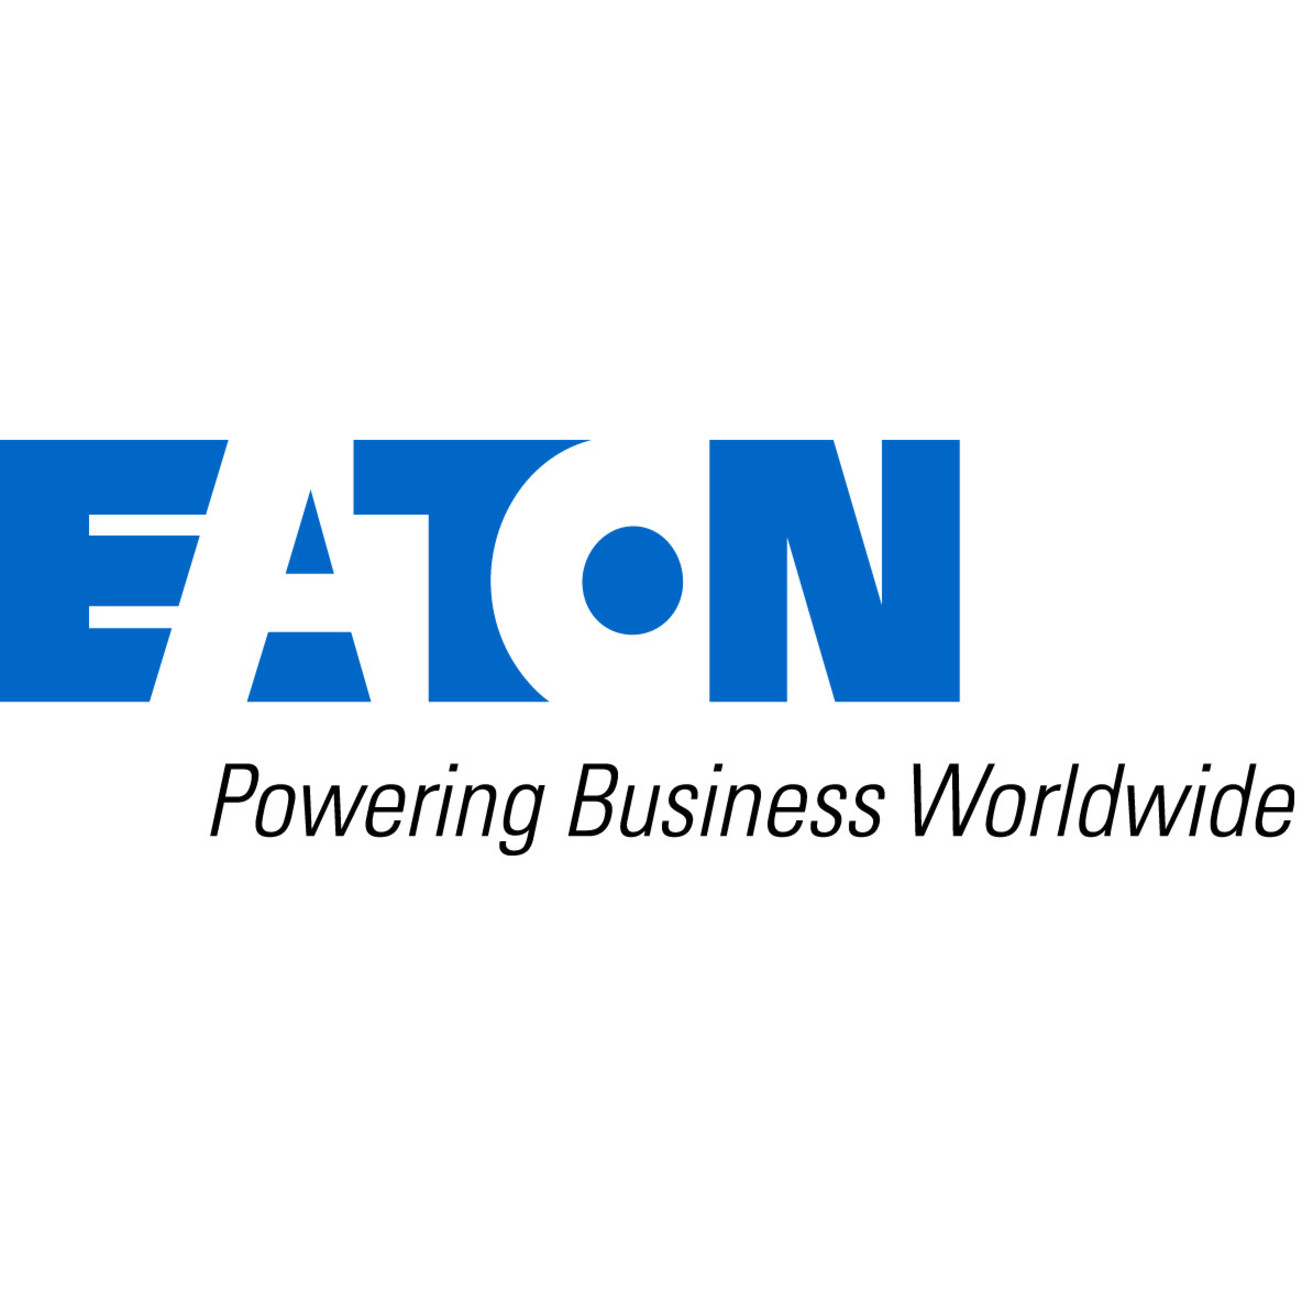 Eaton B-Line V-LINE Wallmount 105 CFM Fan Kit With Filter And Power CordITAir Cooler VLWMFKB